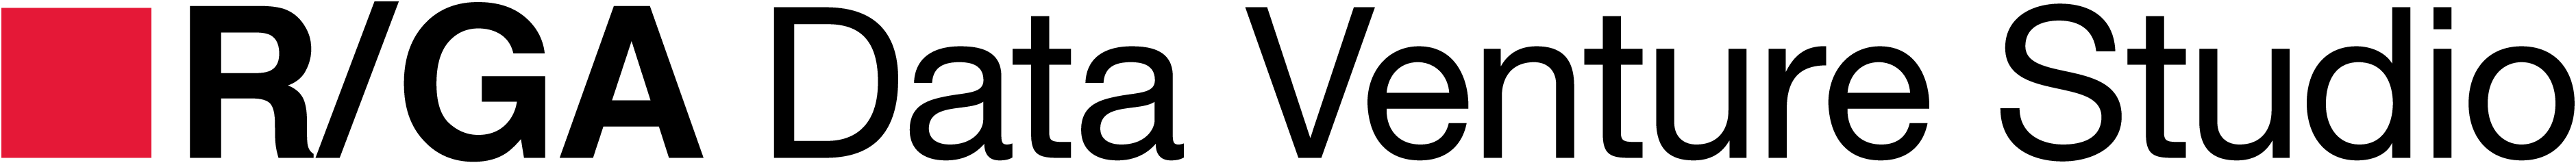 data studio logo